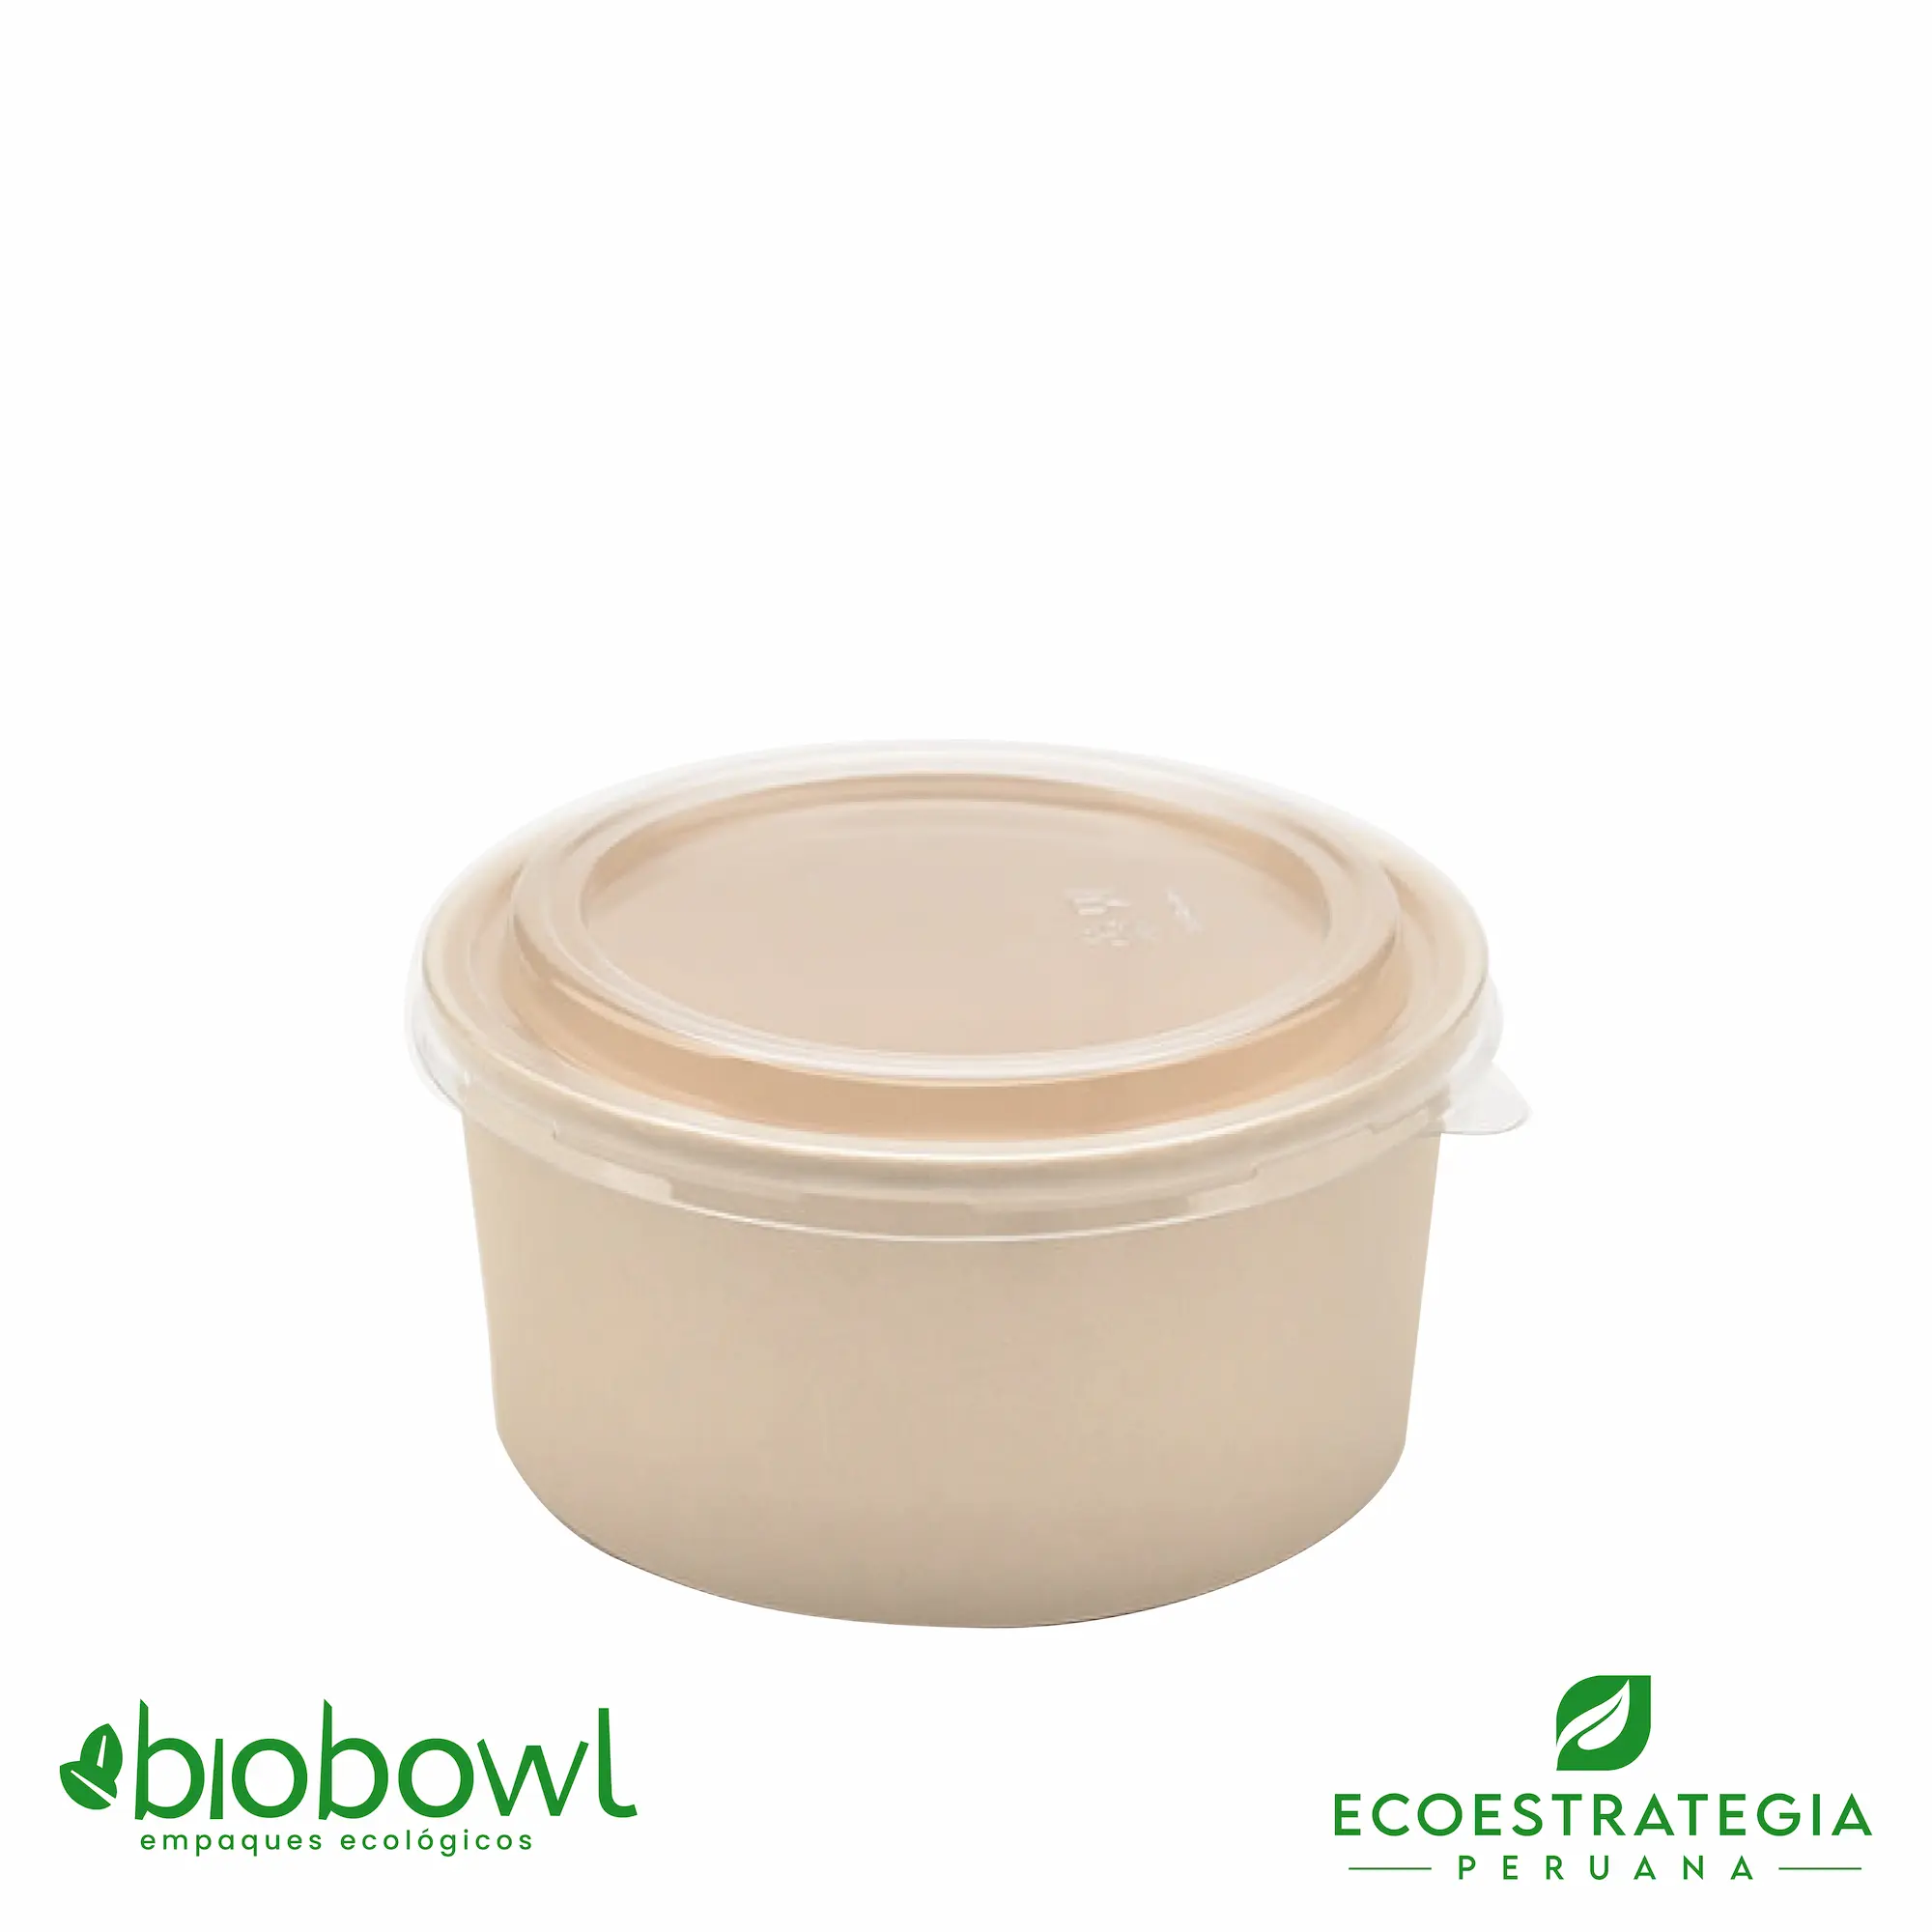 Esta bowl biodegradable de 600 ml es a base de fibra de bambu. Envases descartables con gramaje ideal, cotiza tus empaques, platos y tapers para alimentos